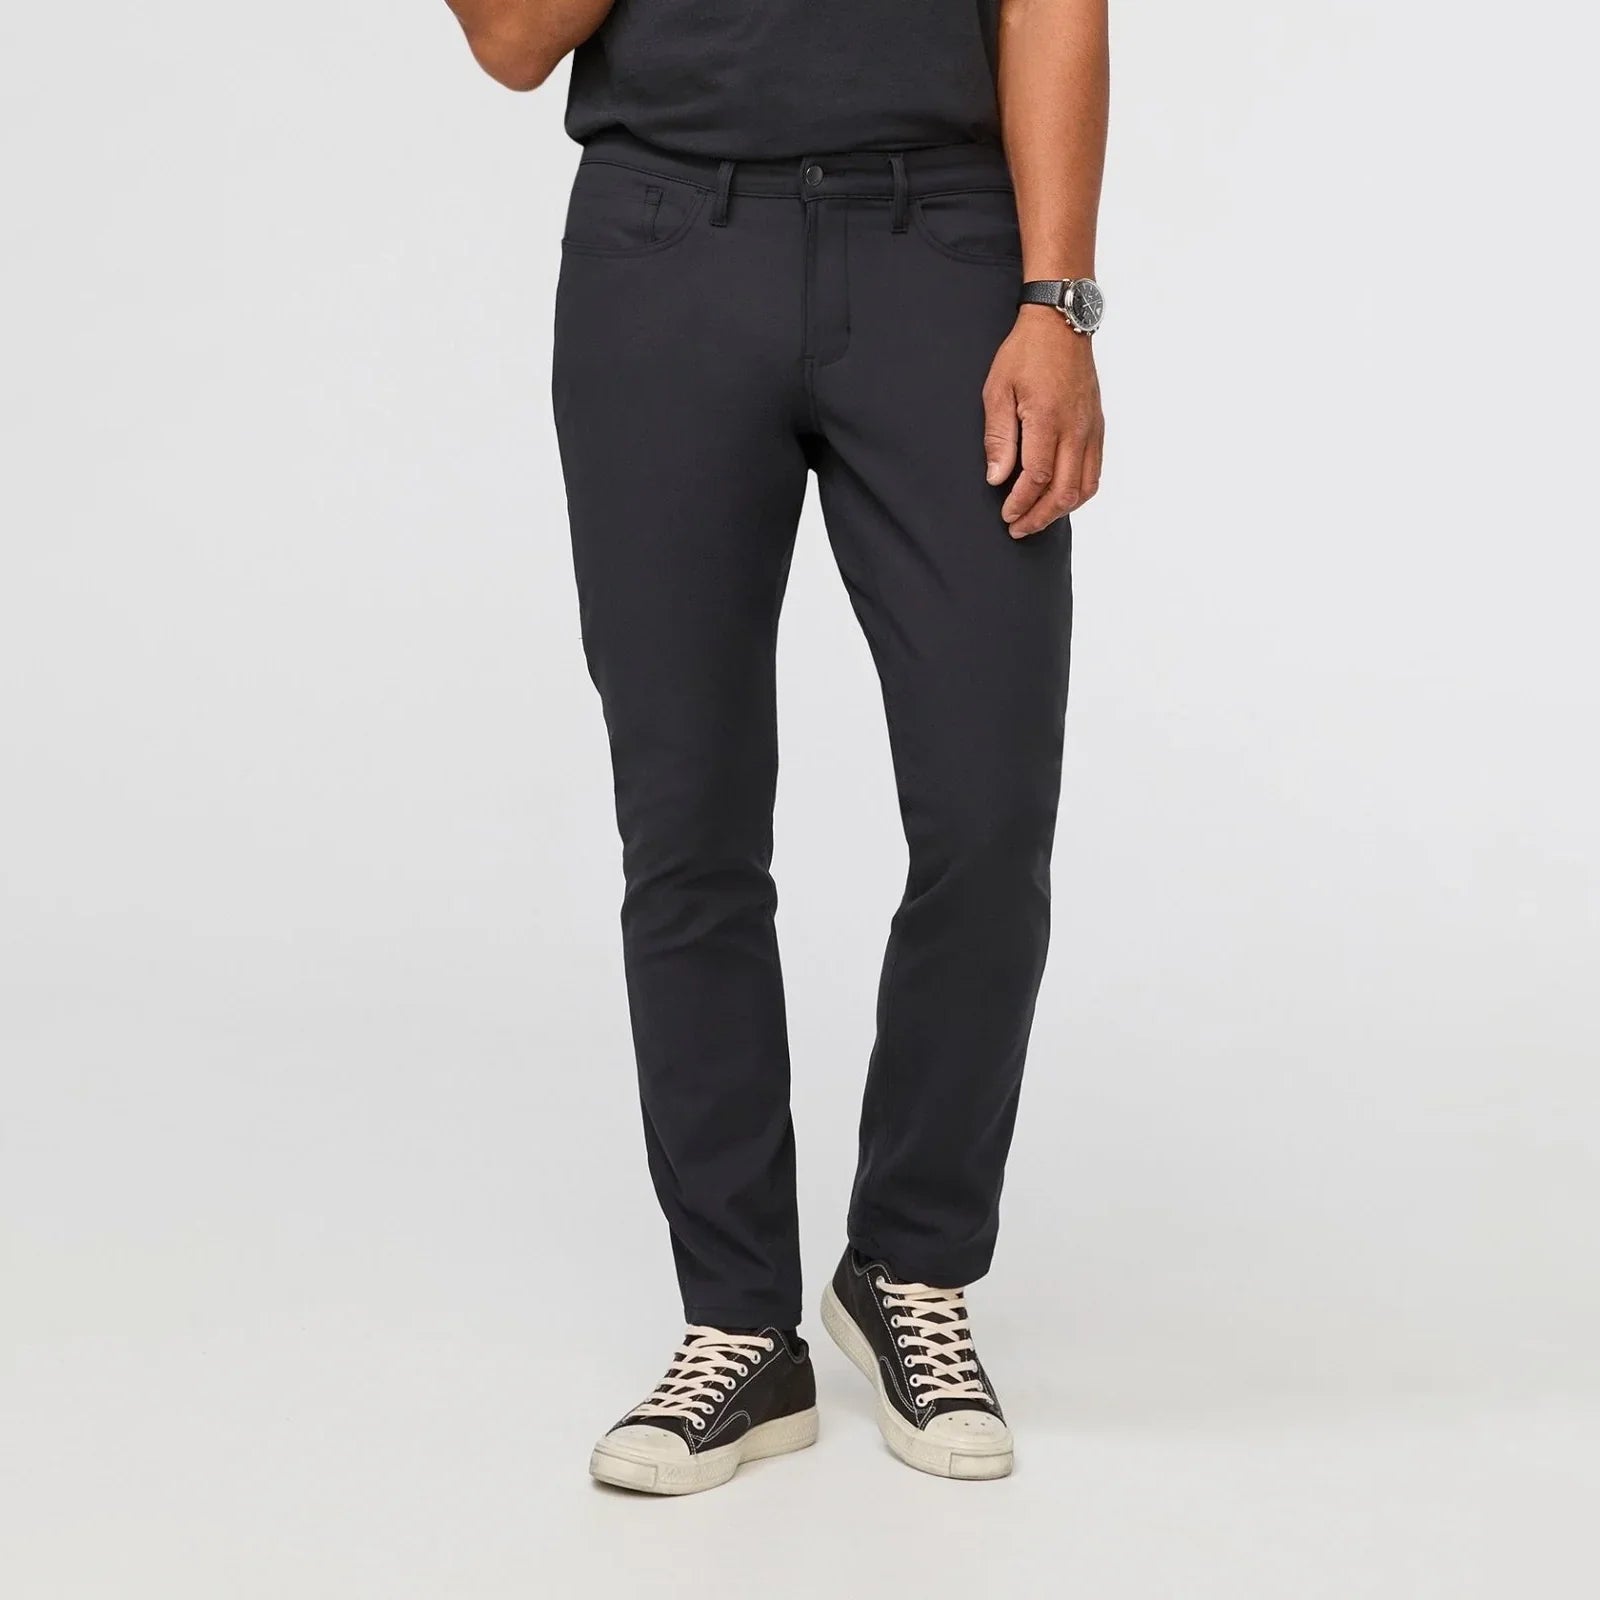 'Du/er NuStretch 5 Pocket Pant Relaxed Taper' in 'Black' colour